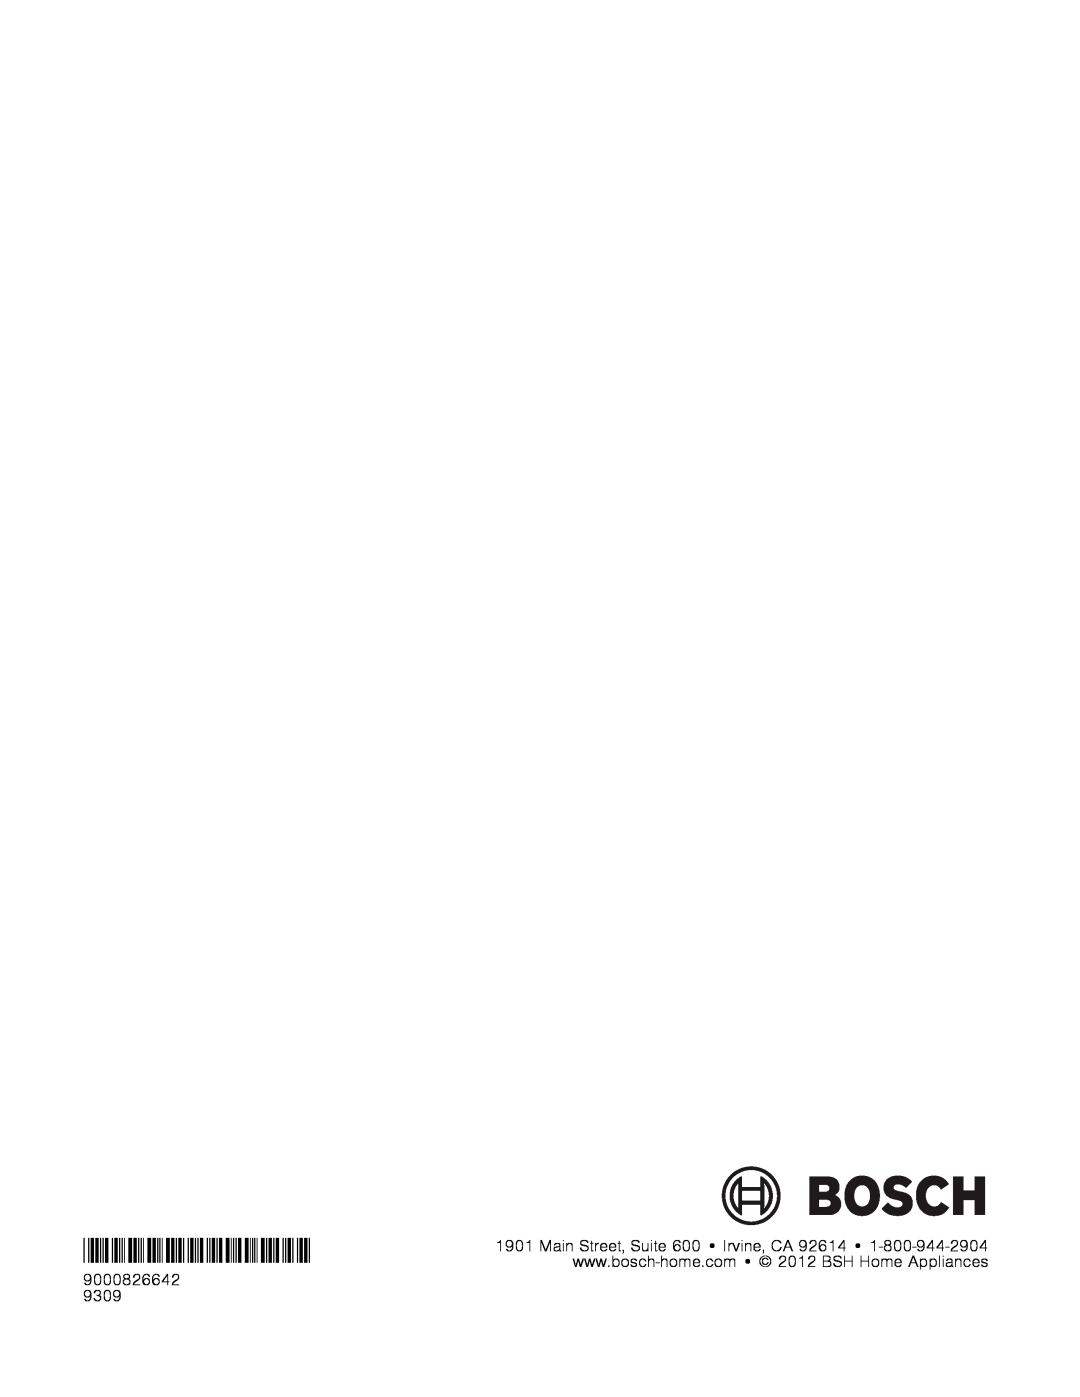 Bosch Appliances WAP24201UC manual Main Street, Suite 600 Irvine, CA 92614, 9000826642 9309 